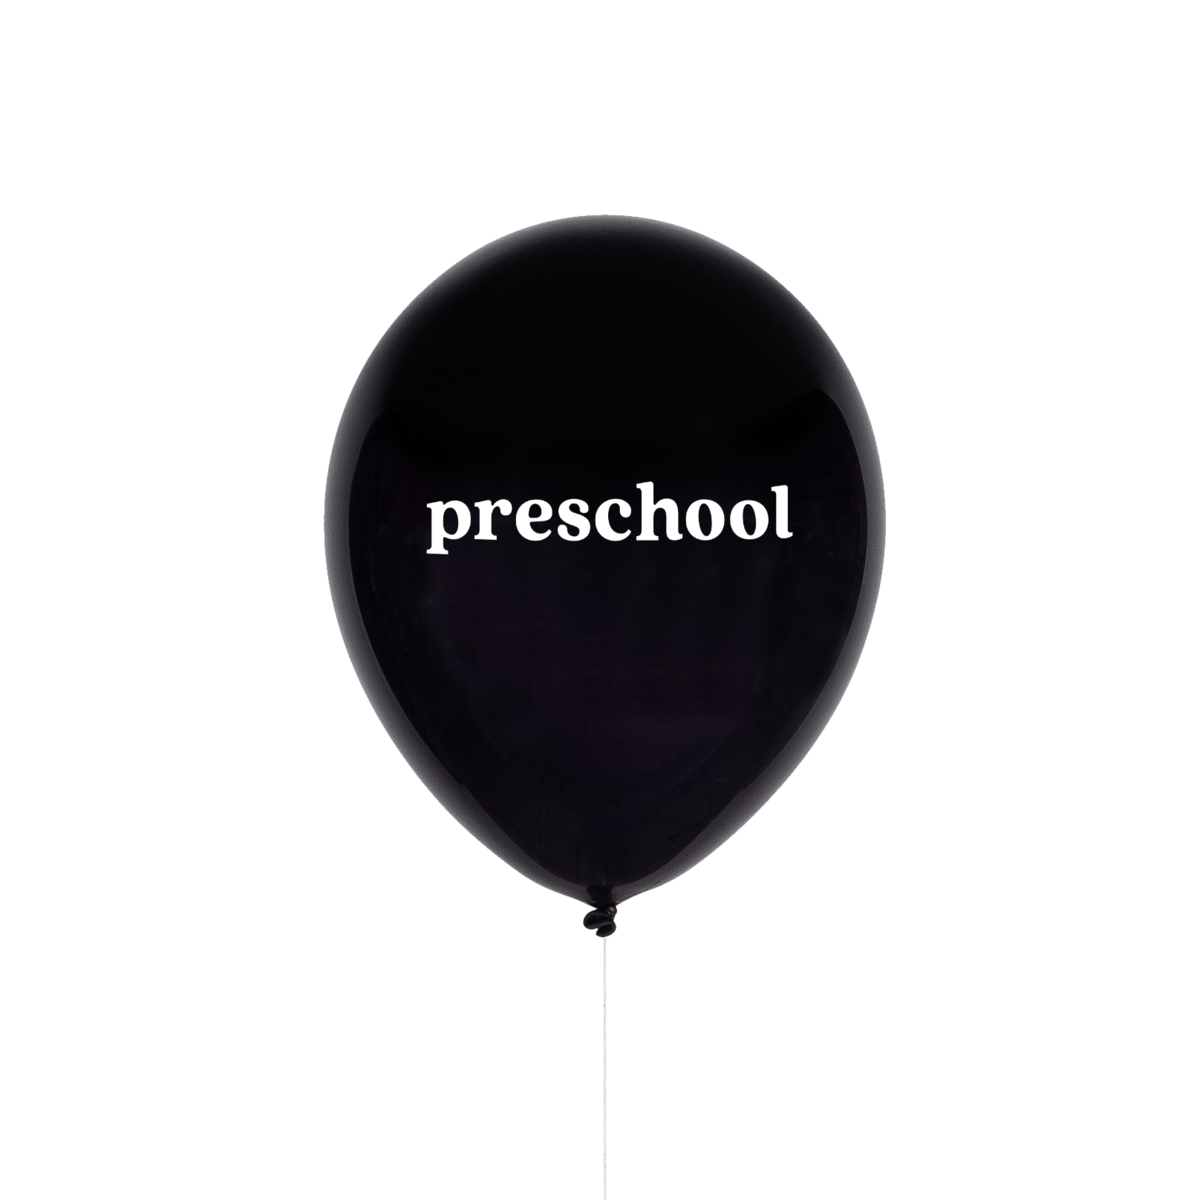 Preschool Printed Balloon